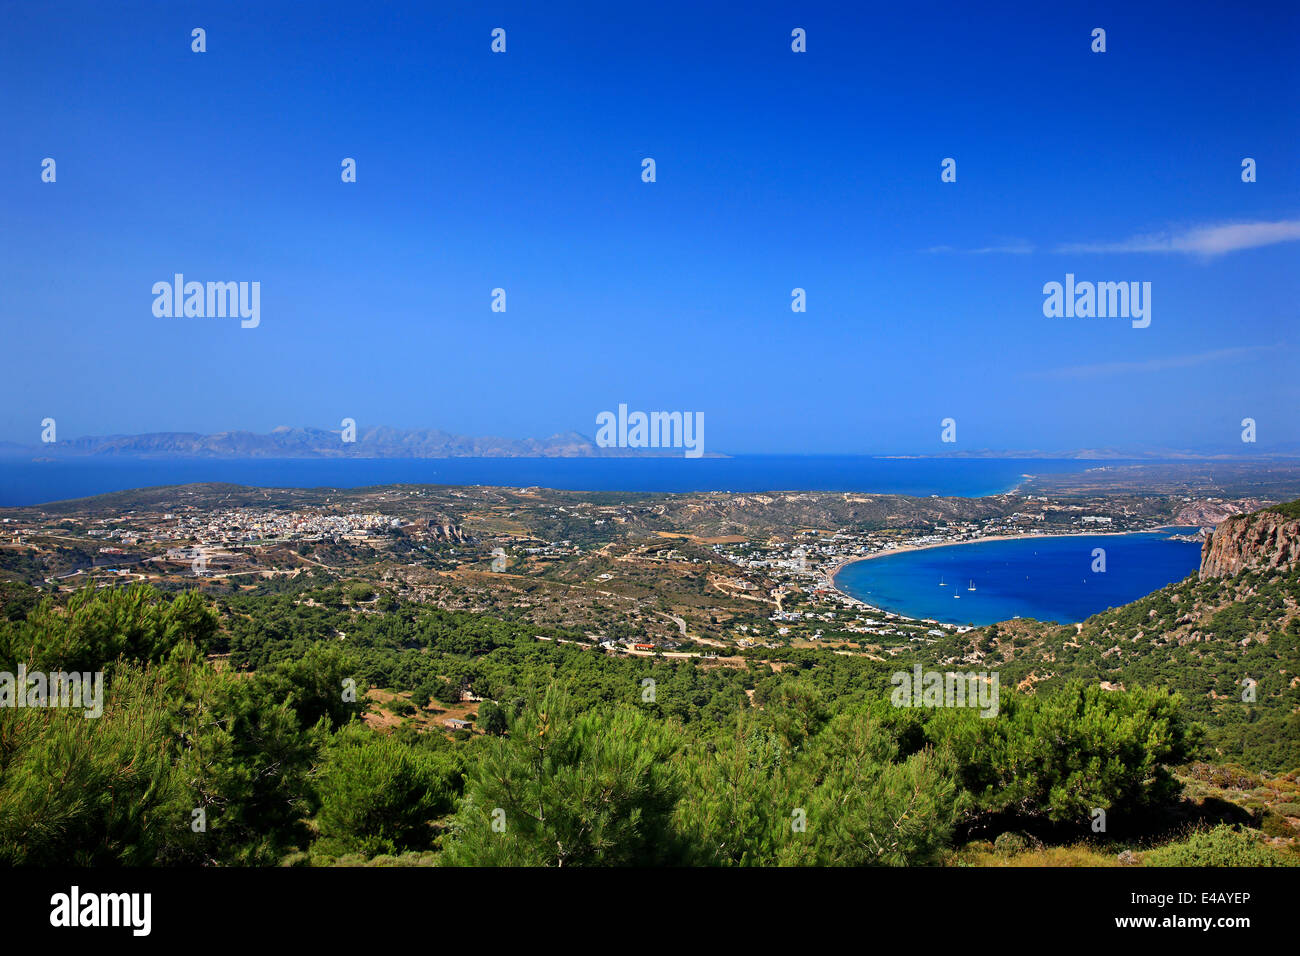 The bay of Kefalos, Kos island, Dodecanese, Aegean sea, Greece Stock Photo